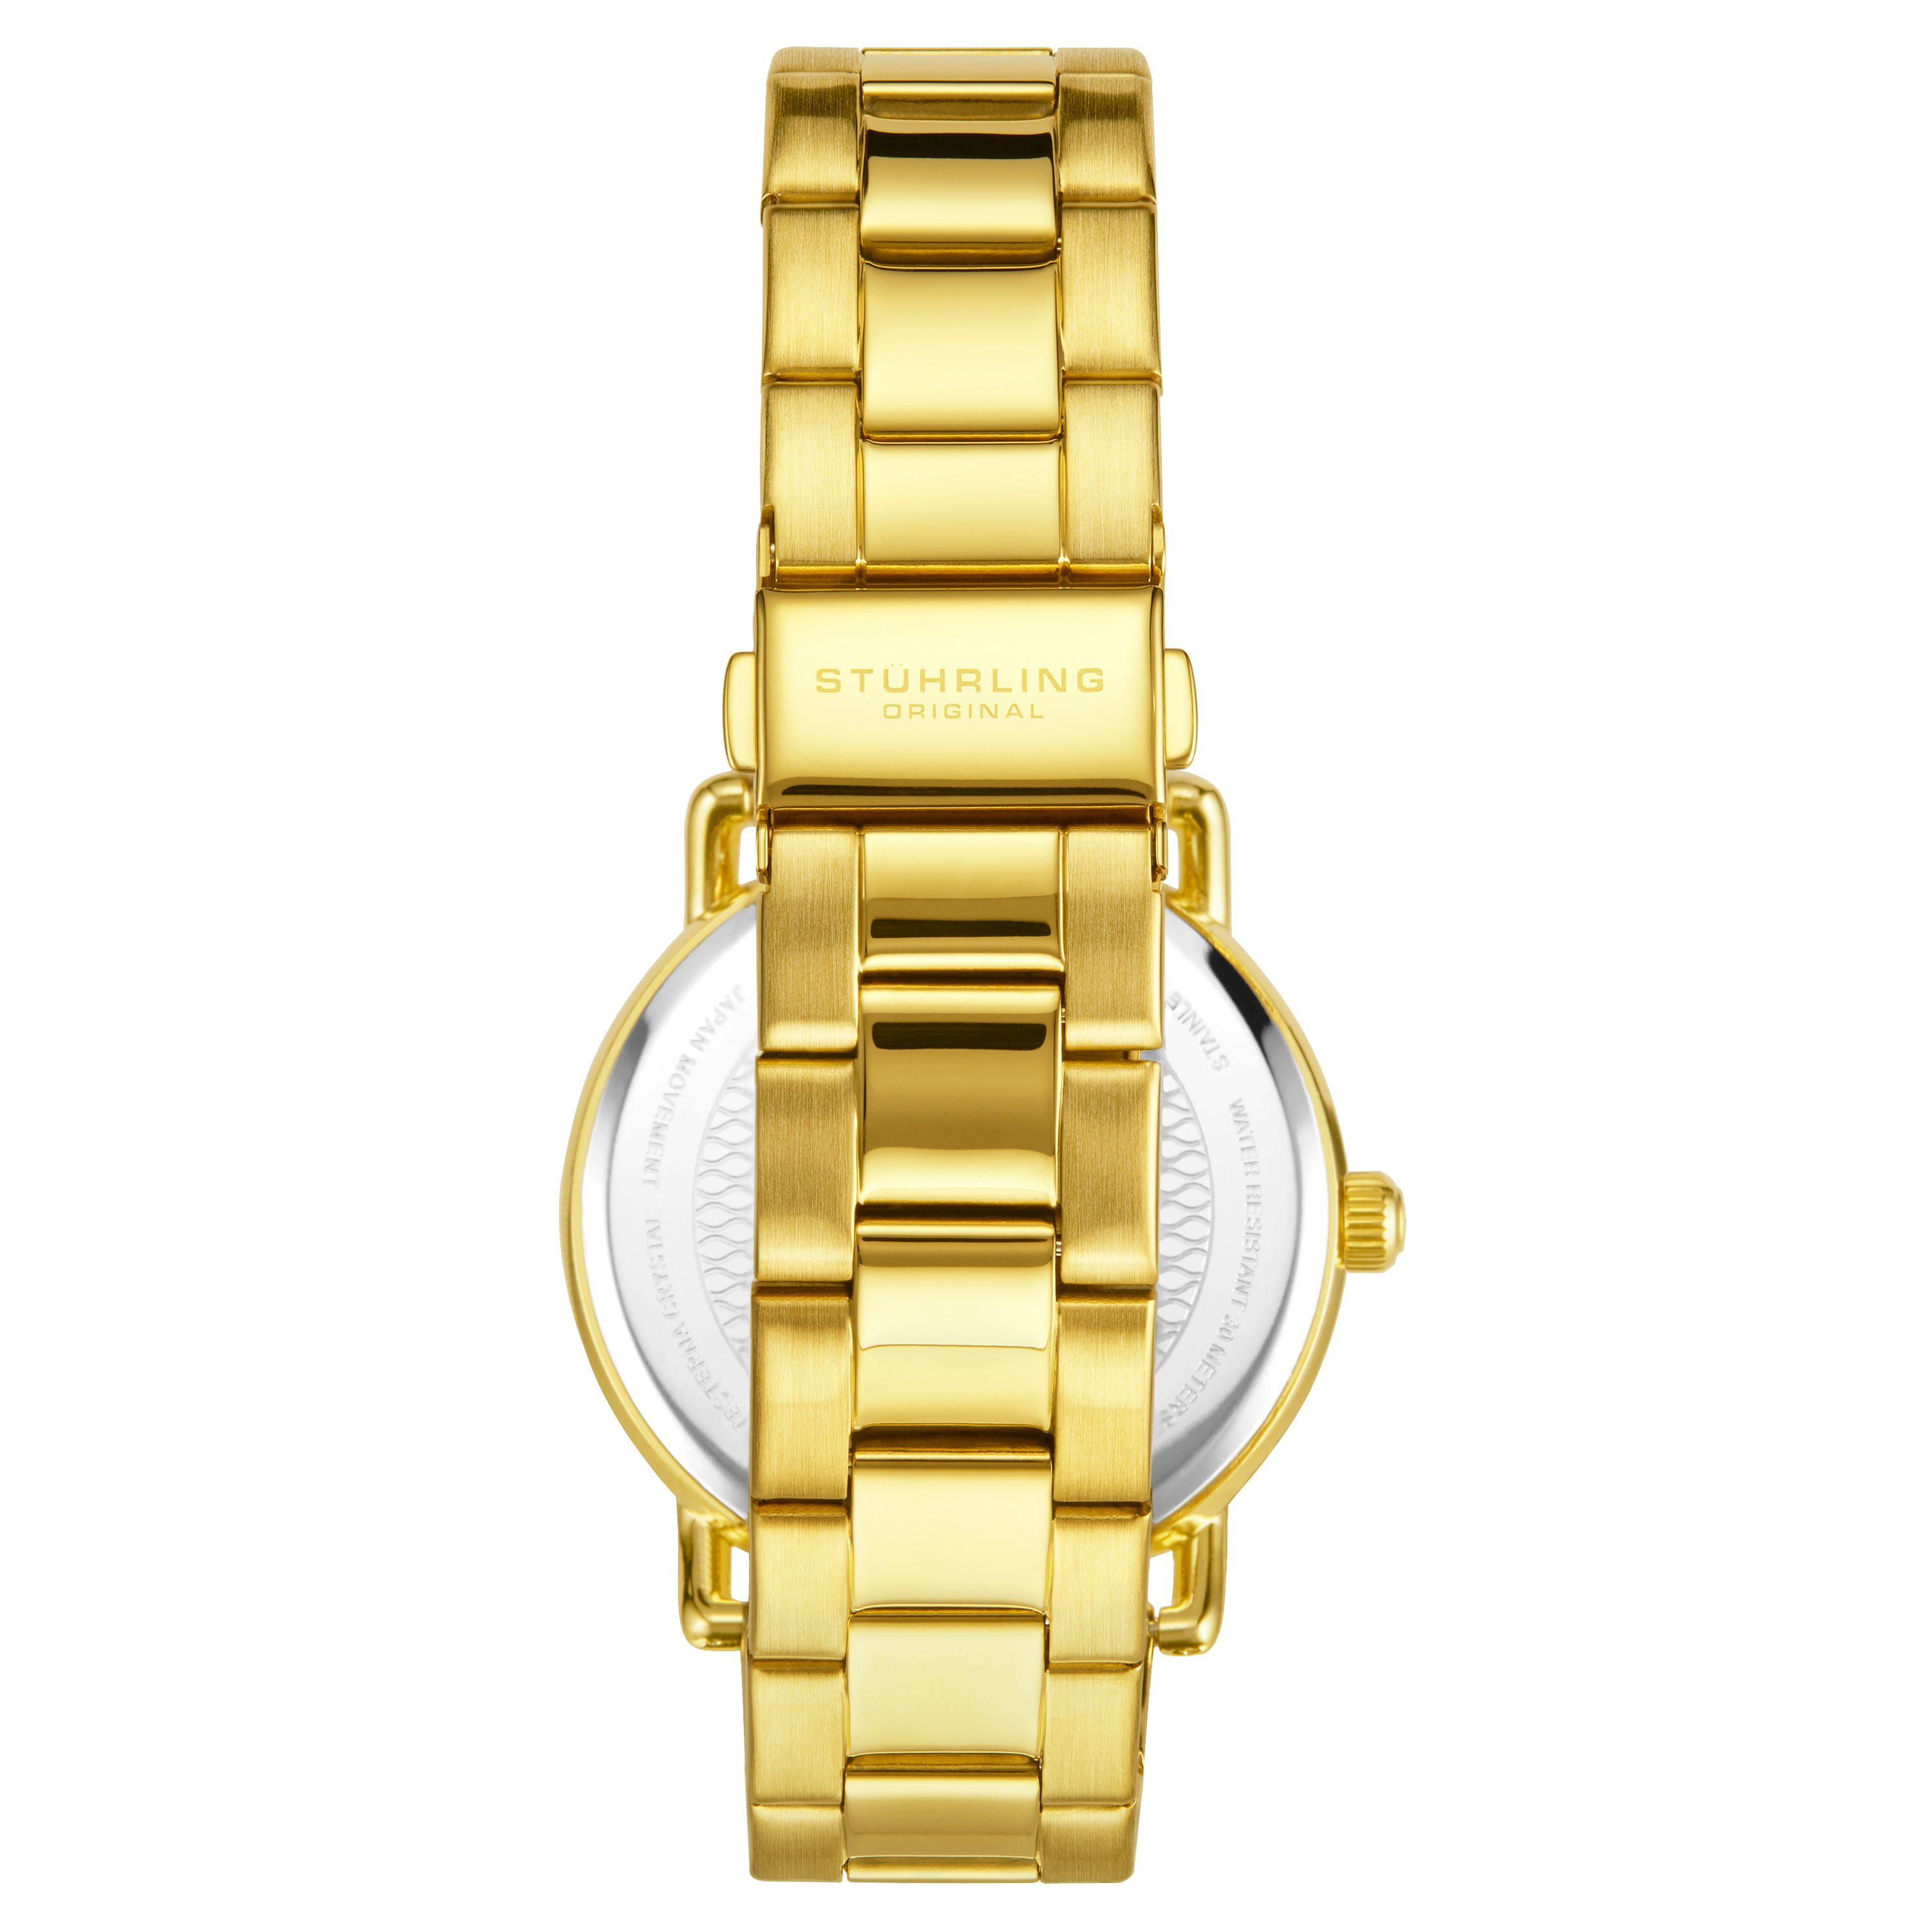 Men's Gold Toned Case, Gold Toned Bezel, Gold Toned Dial, Luminous Gold Toned Hands, Gold Toned Markers, Gold Toned Bracelet Watch